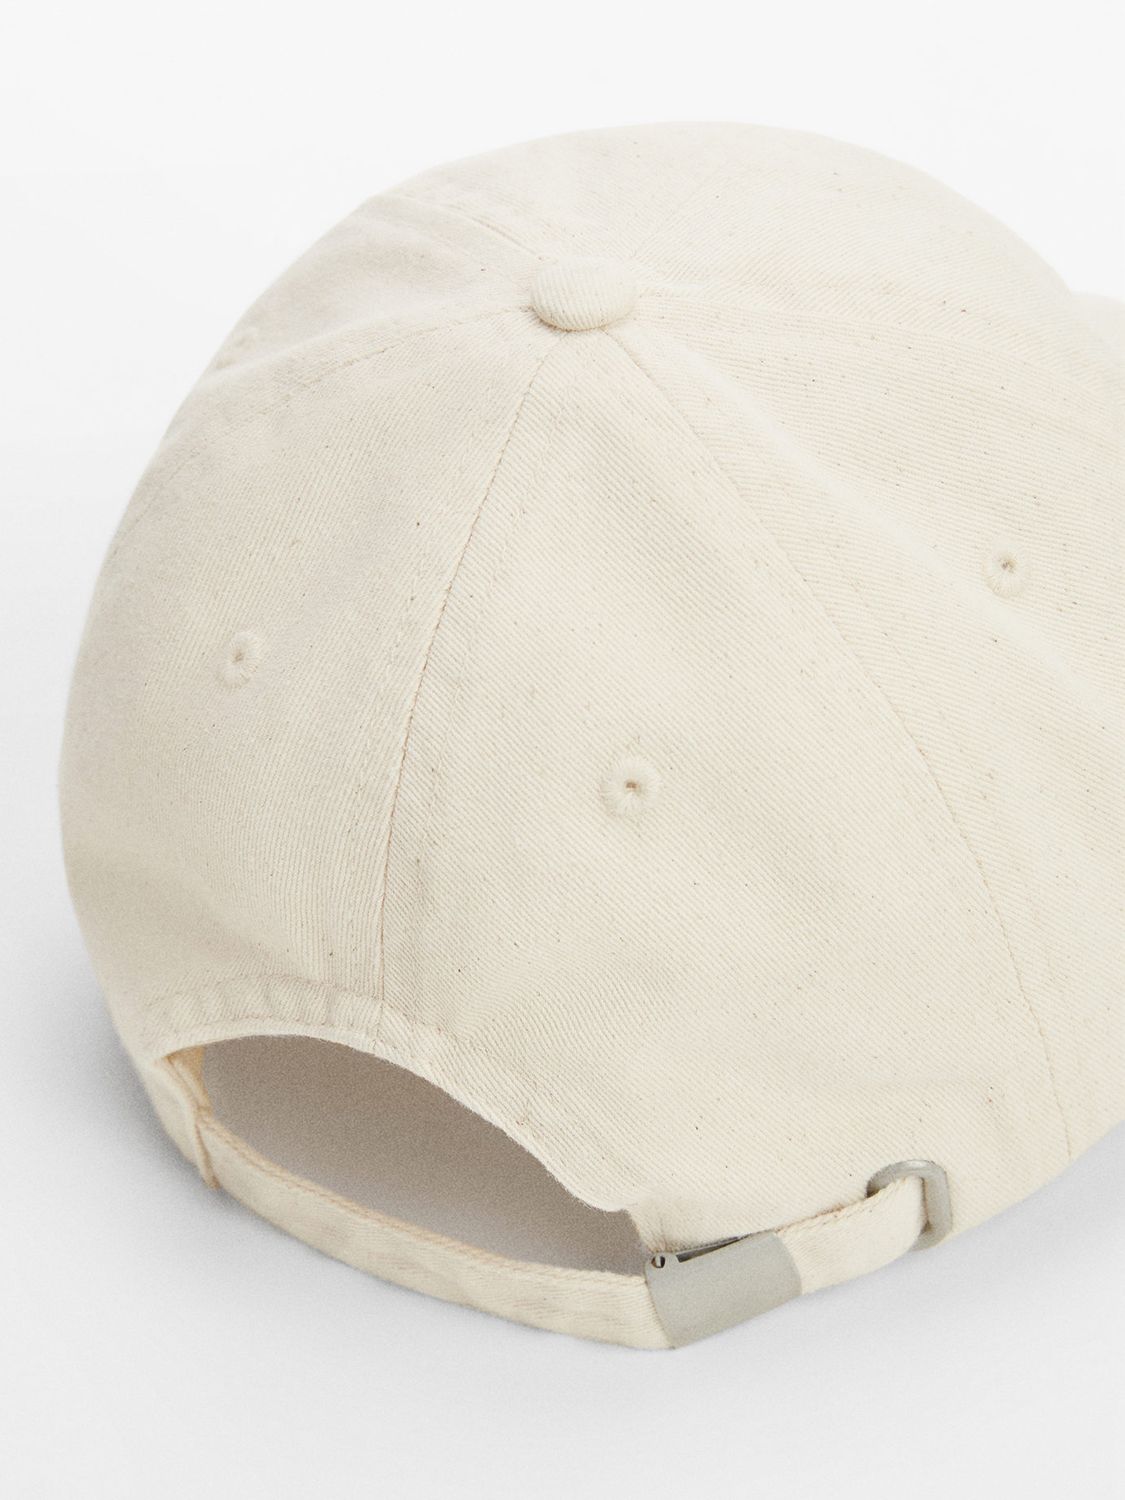 Mango Monaco Cotton Baseball Cap, Light Beige, One Size